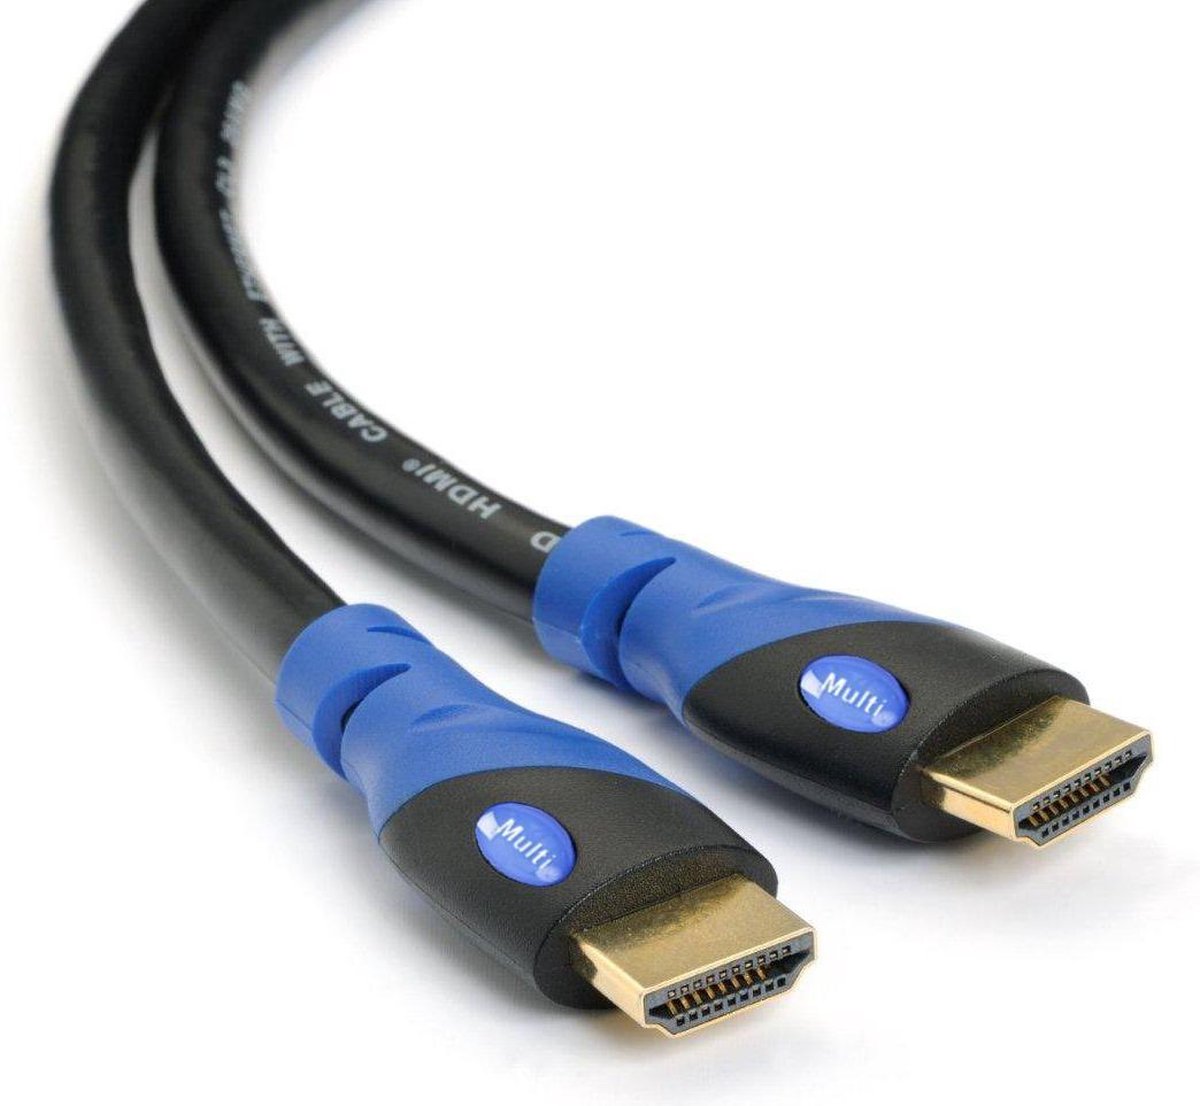 MutecPower High Speed HDMIkabel met Ethernet 2.0 - Full HD - 20 meter review